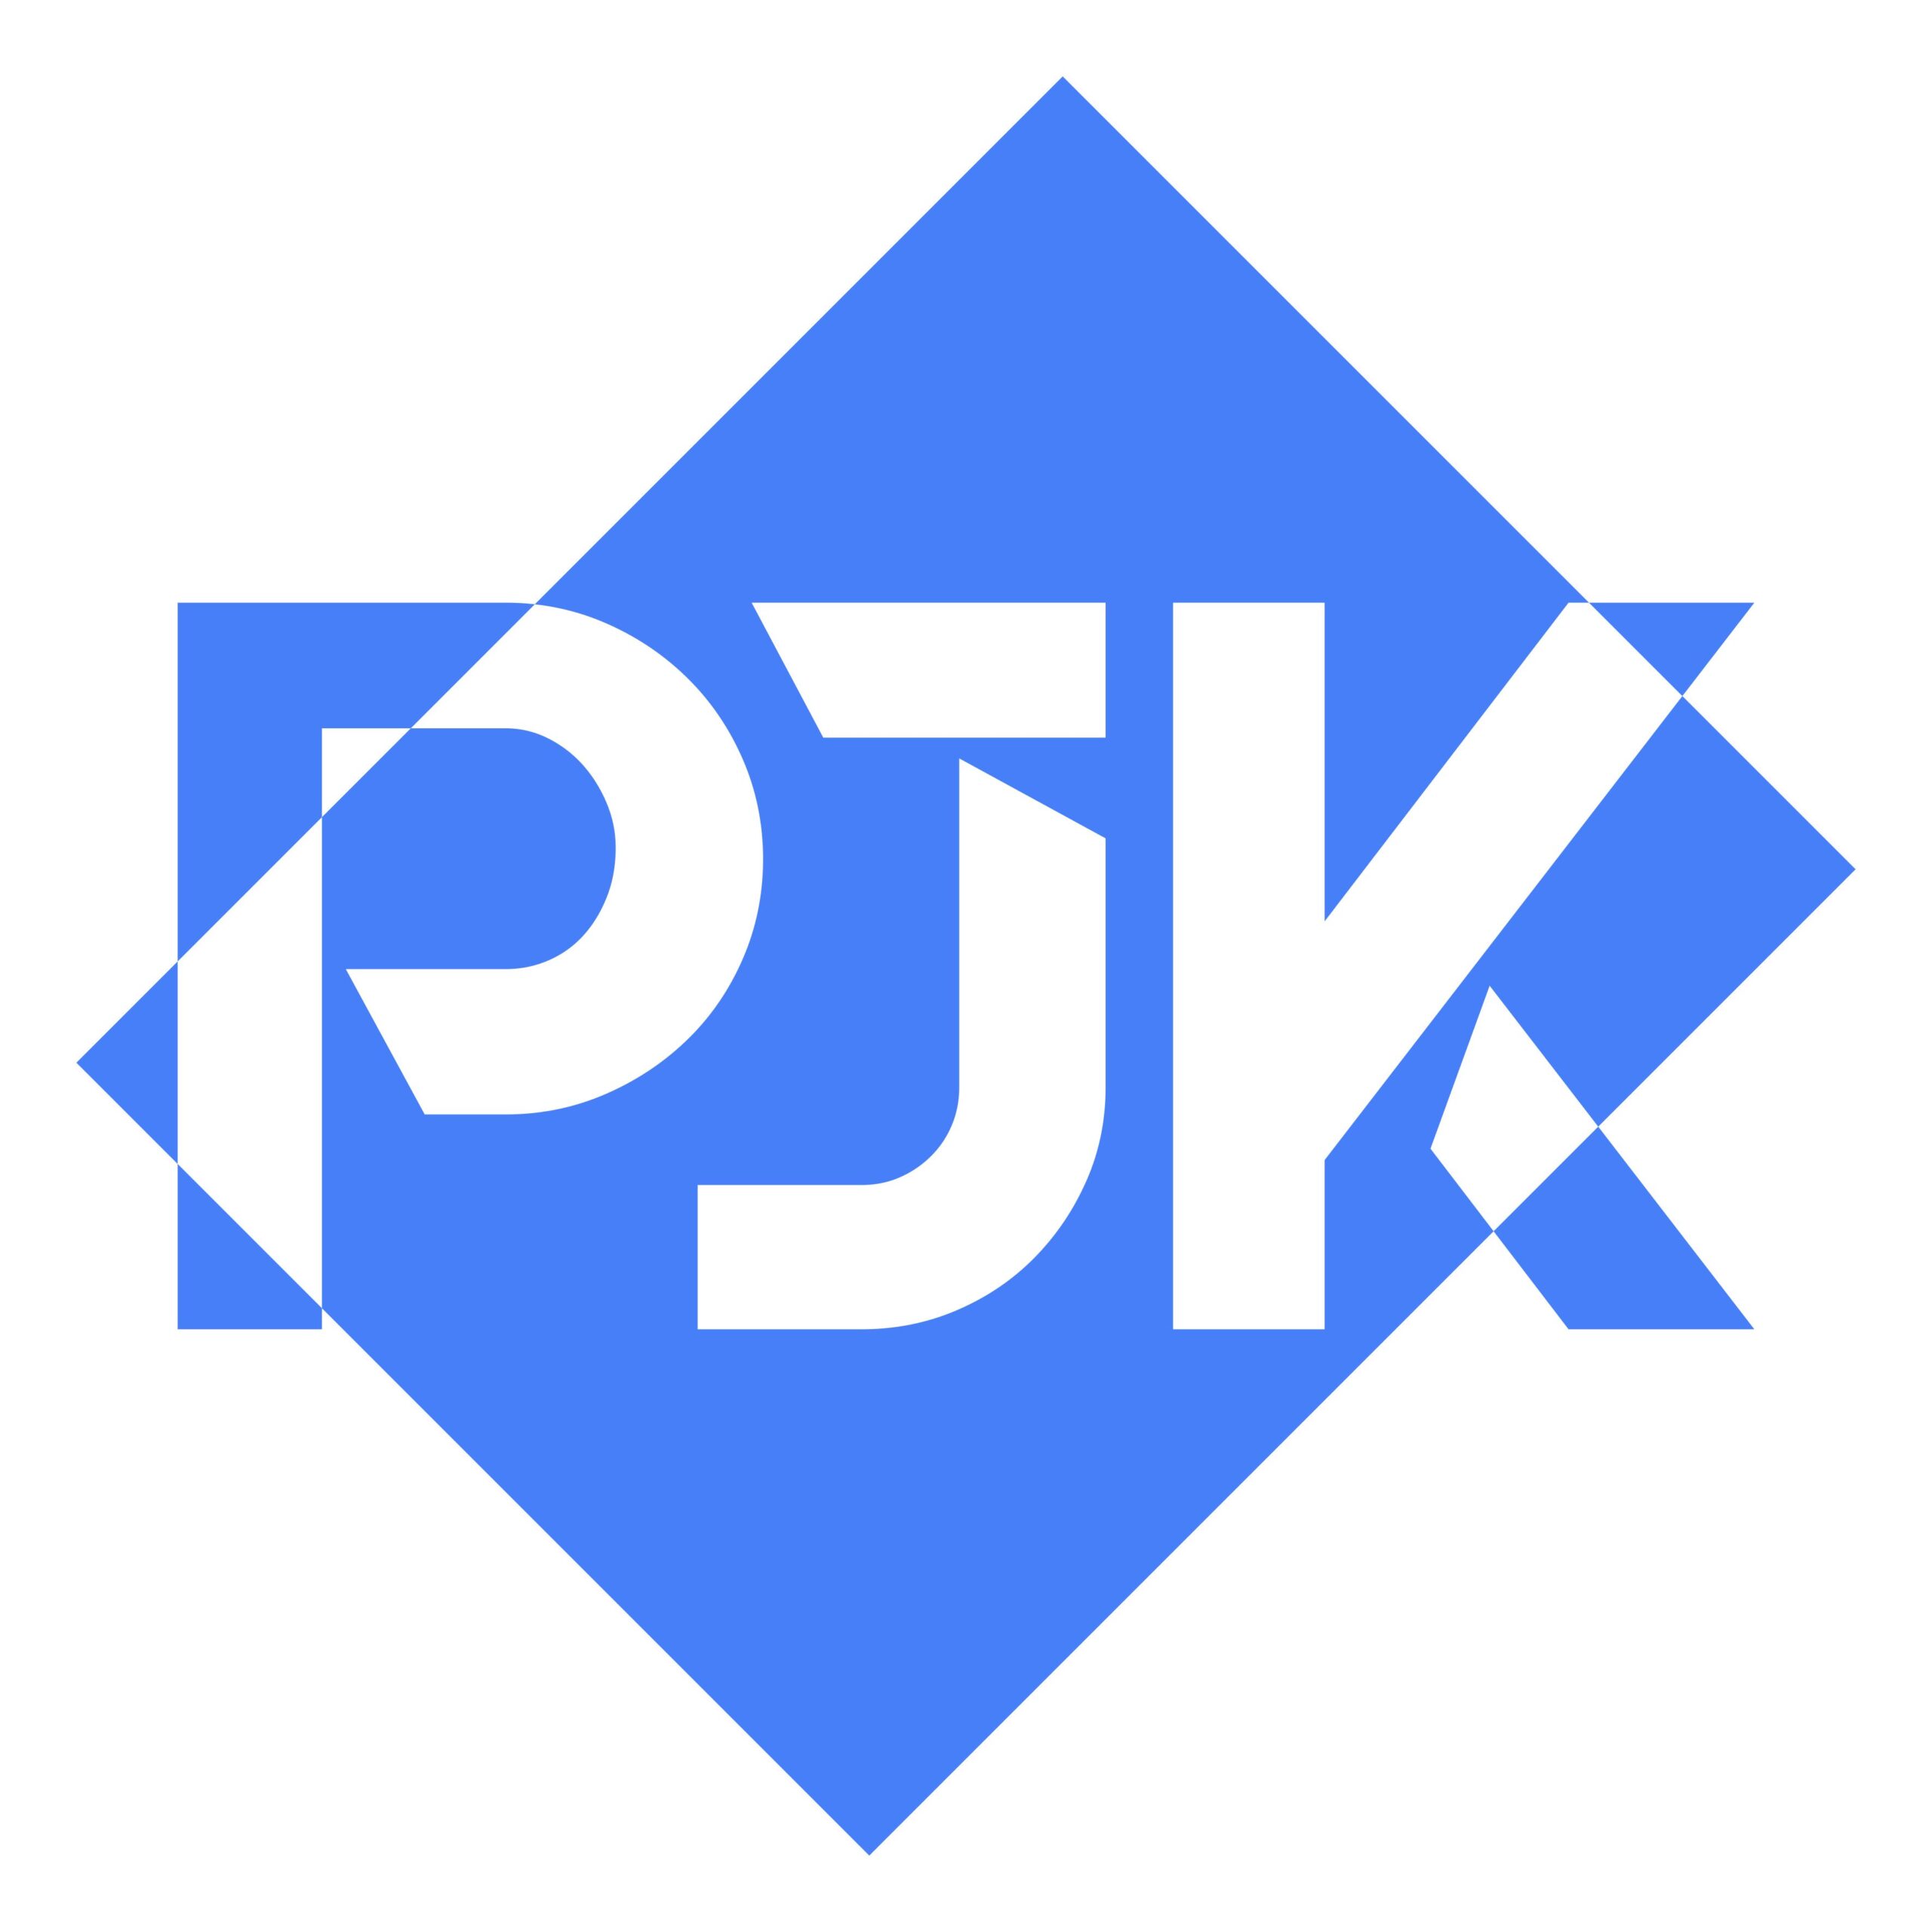 PJK Photobooth Jogja Kreatif Icon Logo Vector scaled